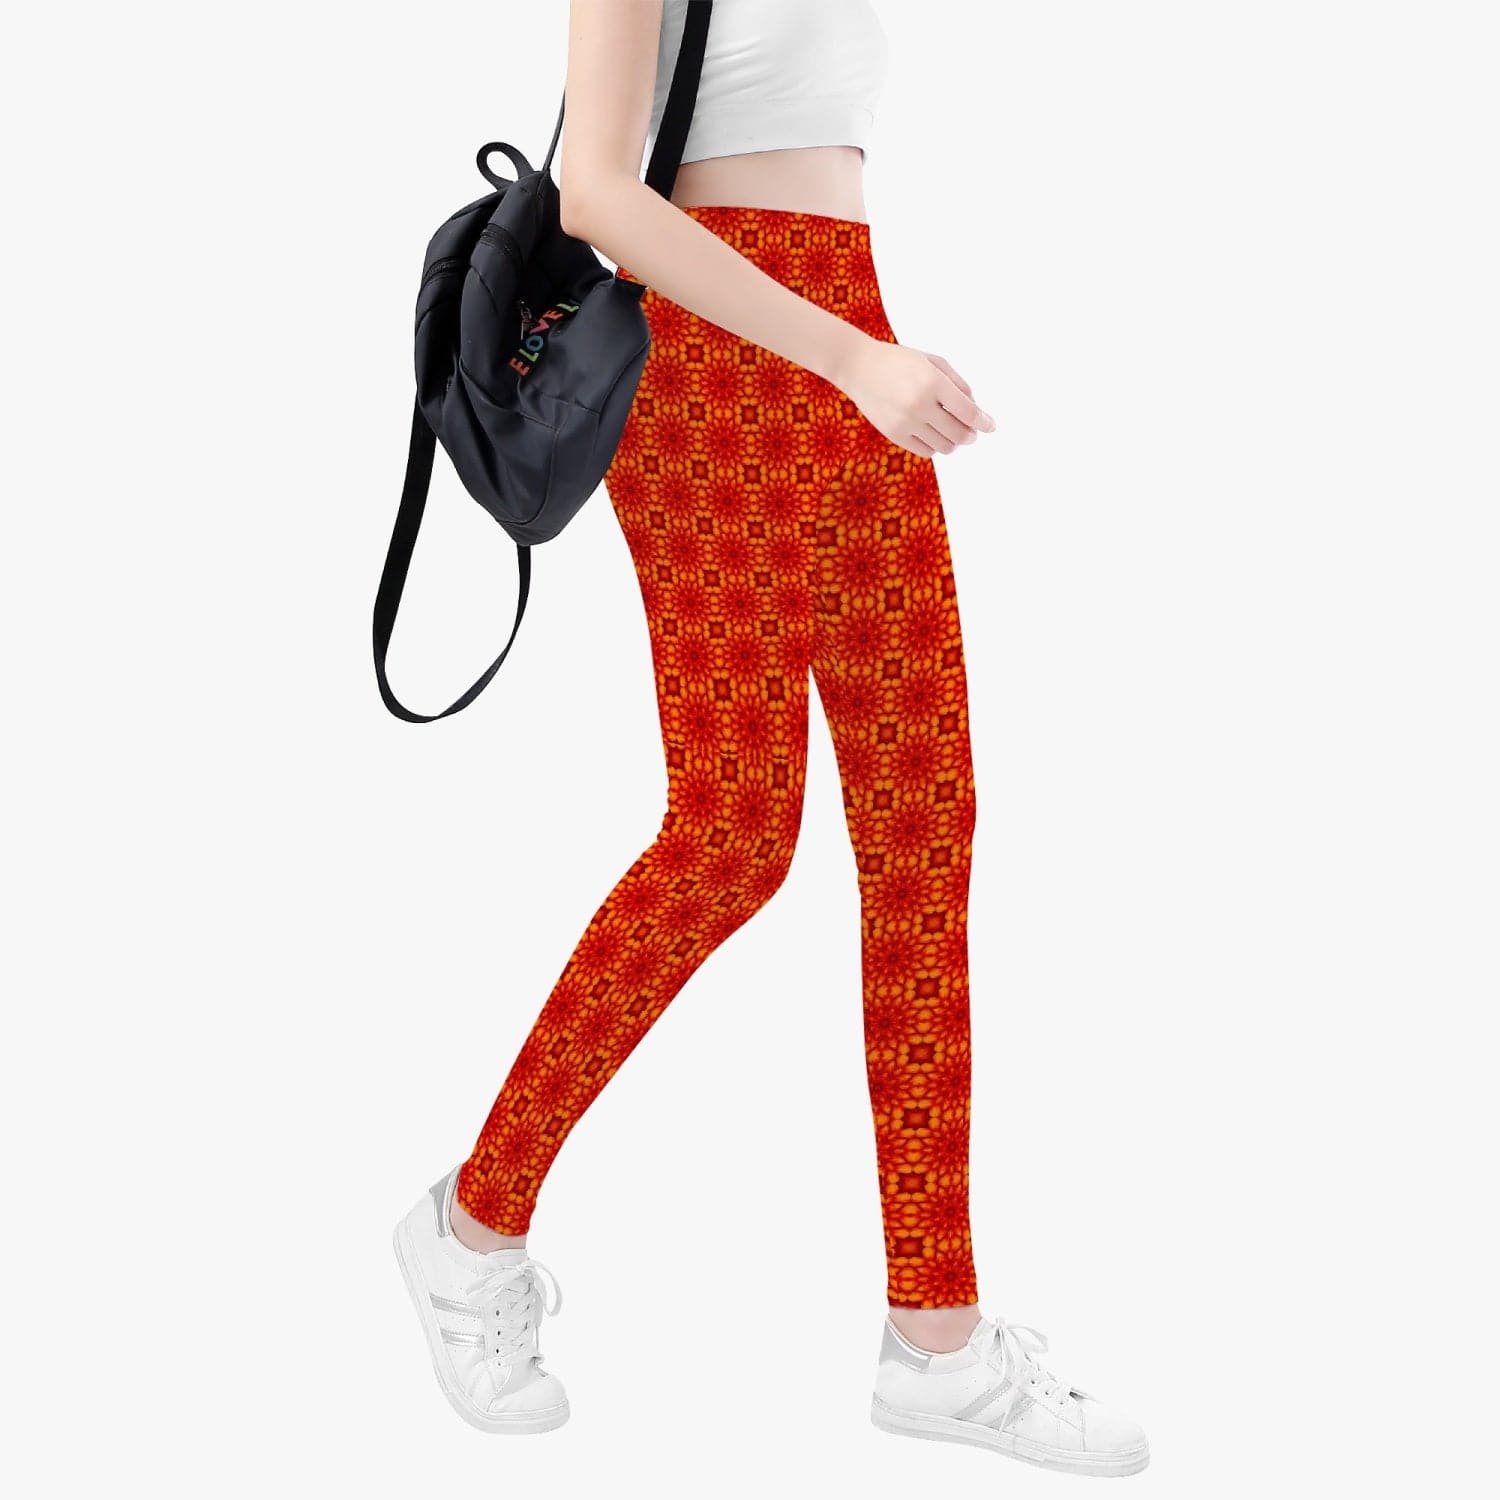 Orange Sacral Chacra Yoga Pants, by Sensus Studio Design